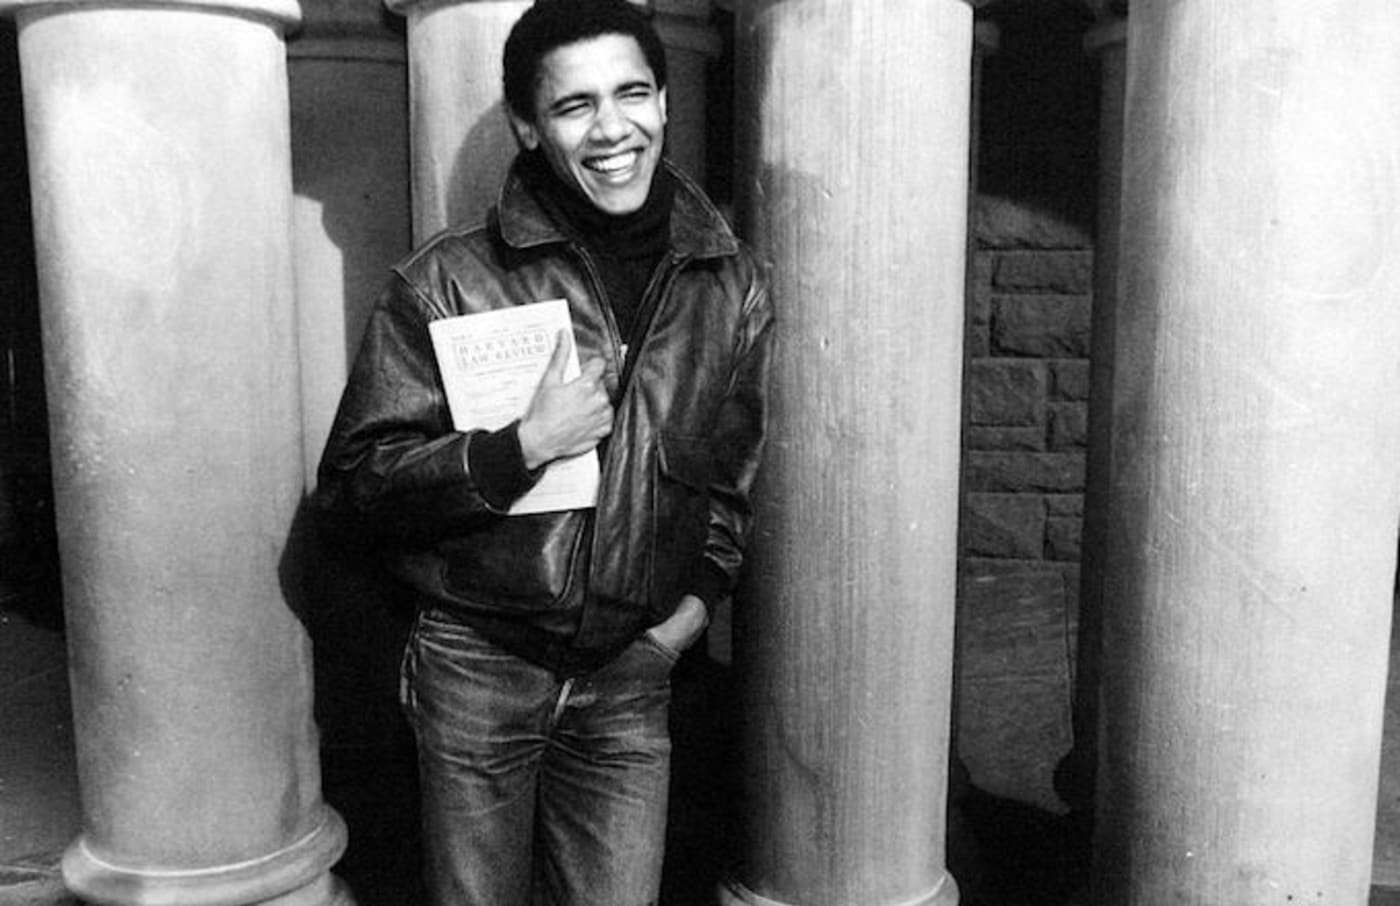 Barack Obama as a student at Harvard Law